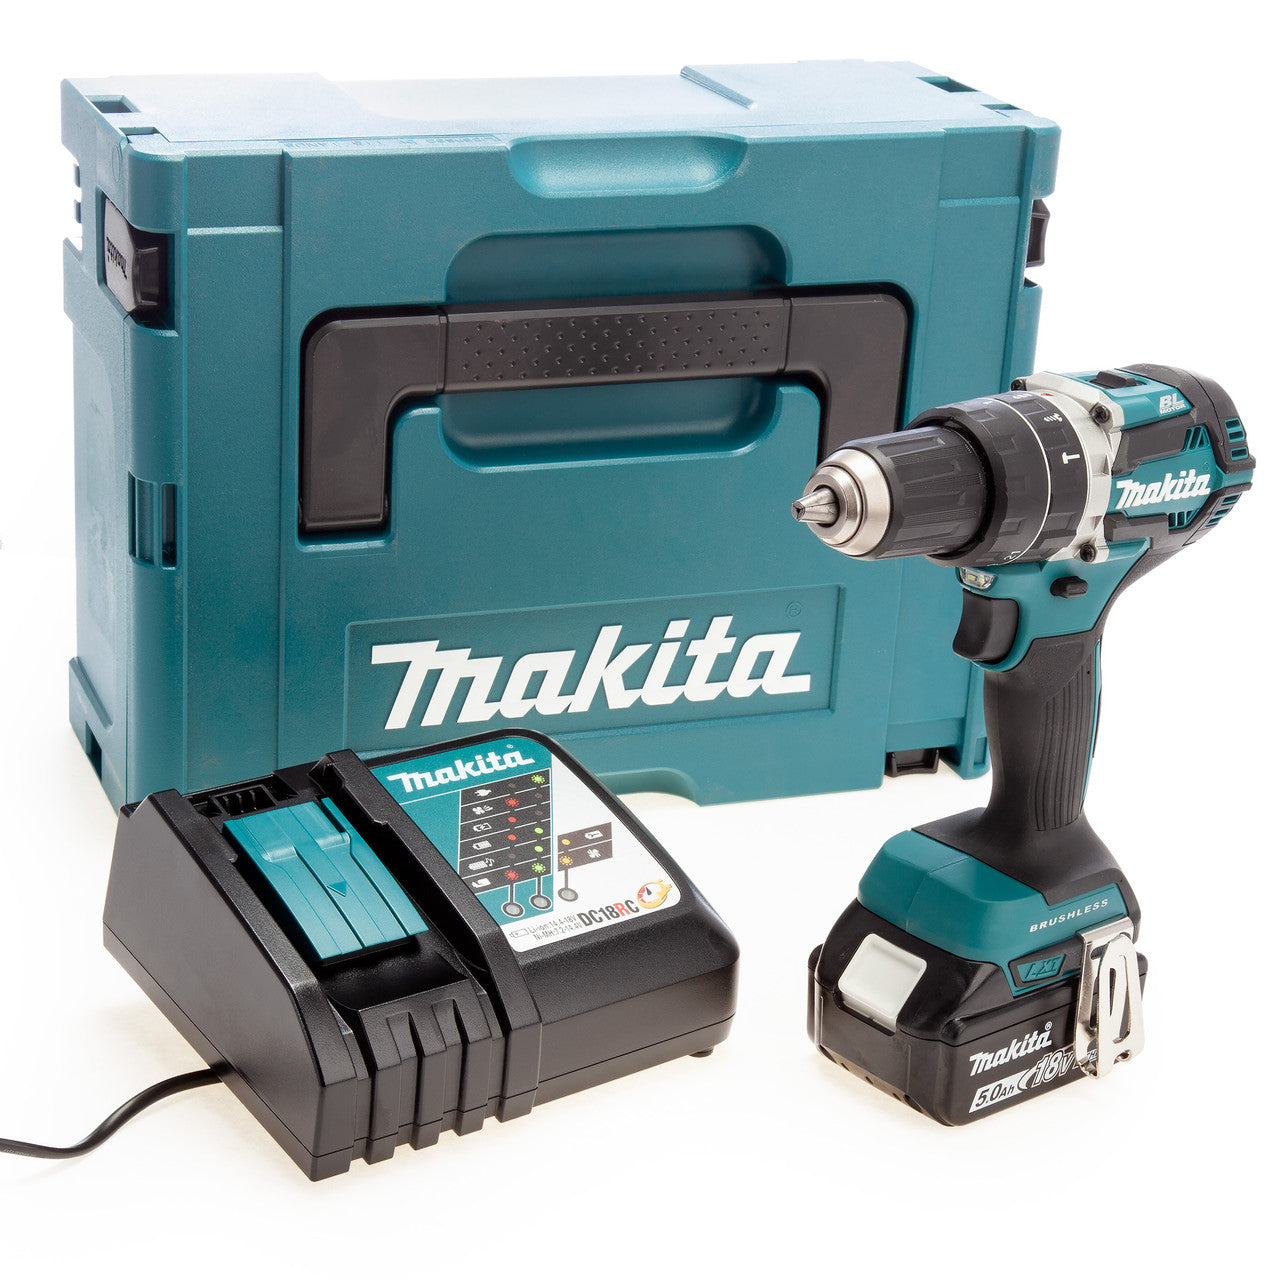 Makita DHP484 18V LXT Brushless Combi Drill (1 x 5.0Ah Battery) in MakPac Case